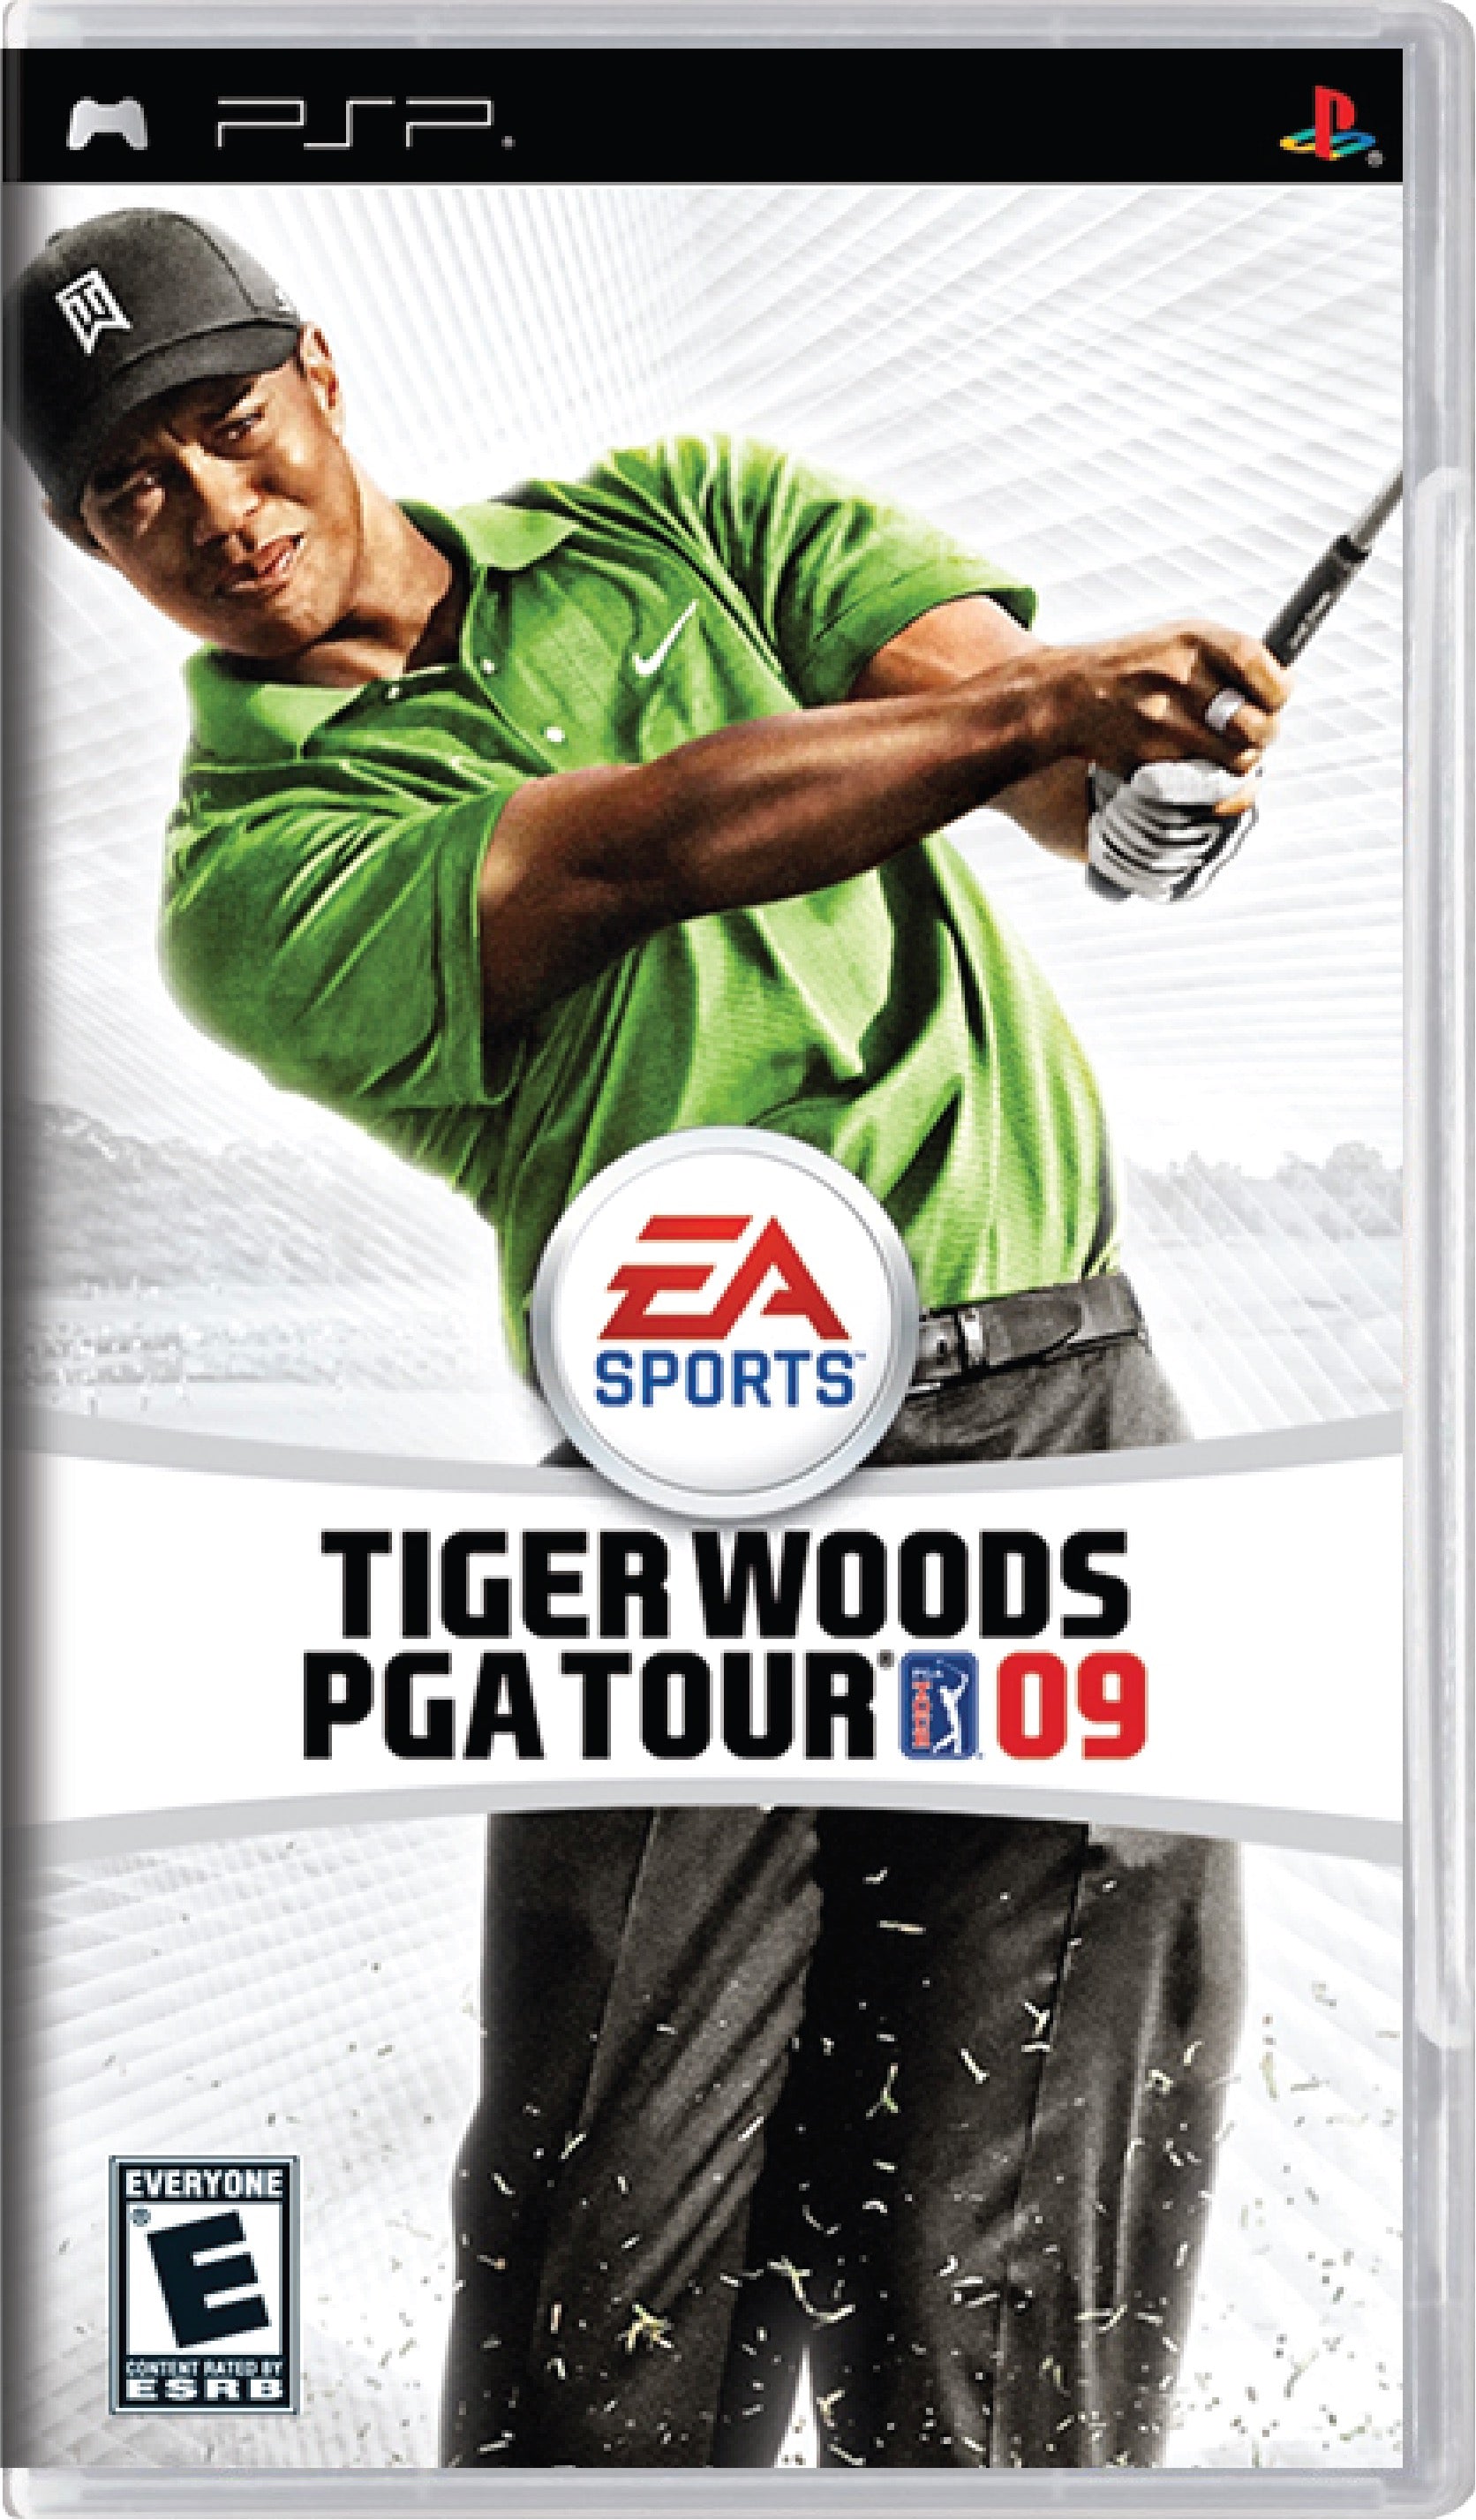 Tiger Woods PGA Tour 09 Cover Art